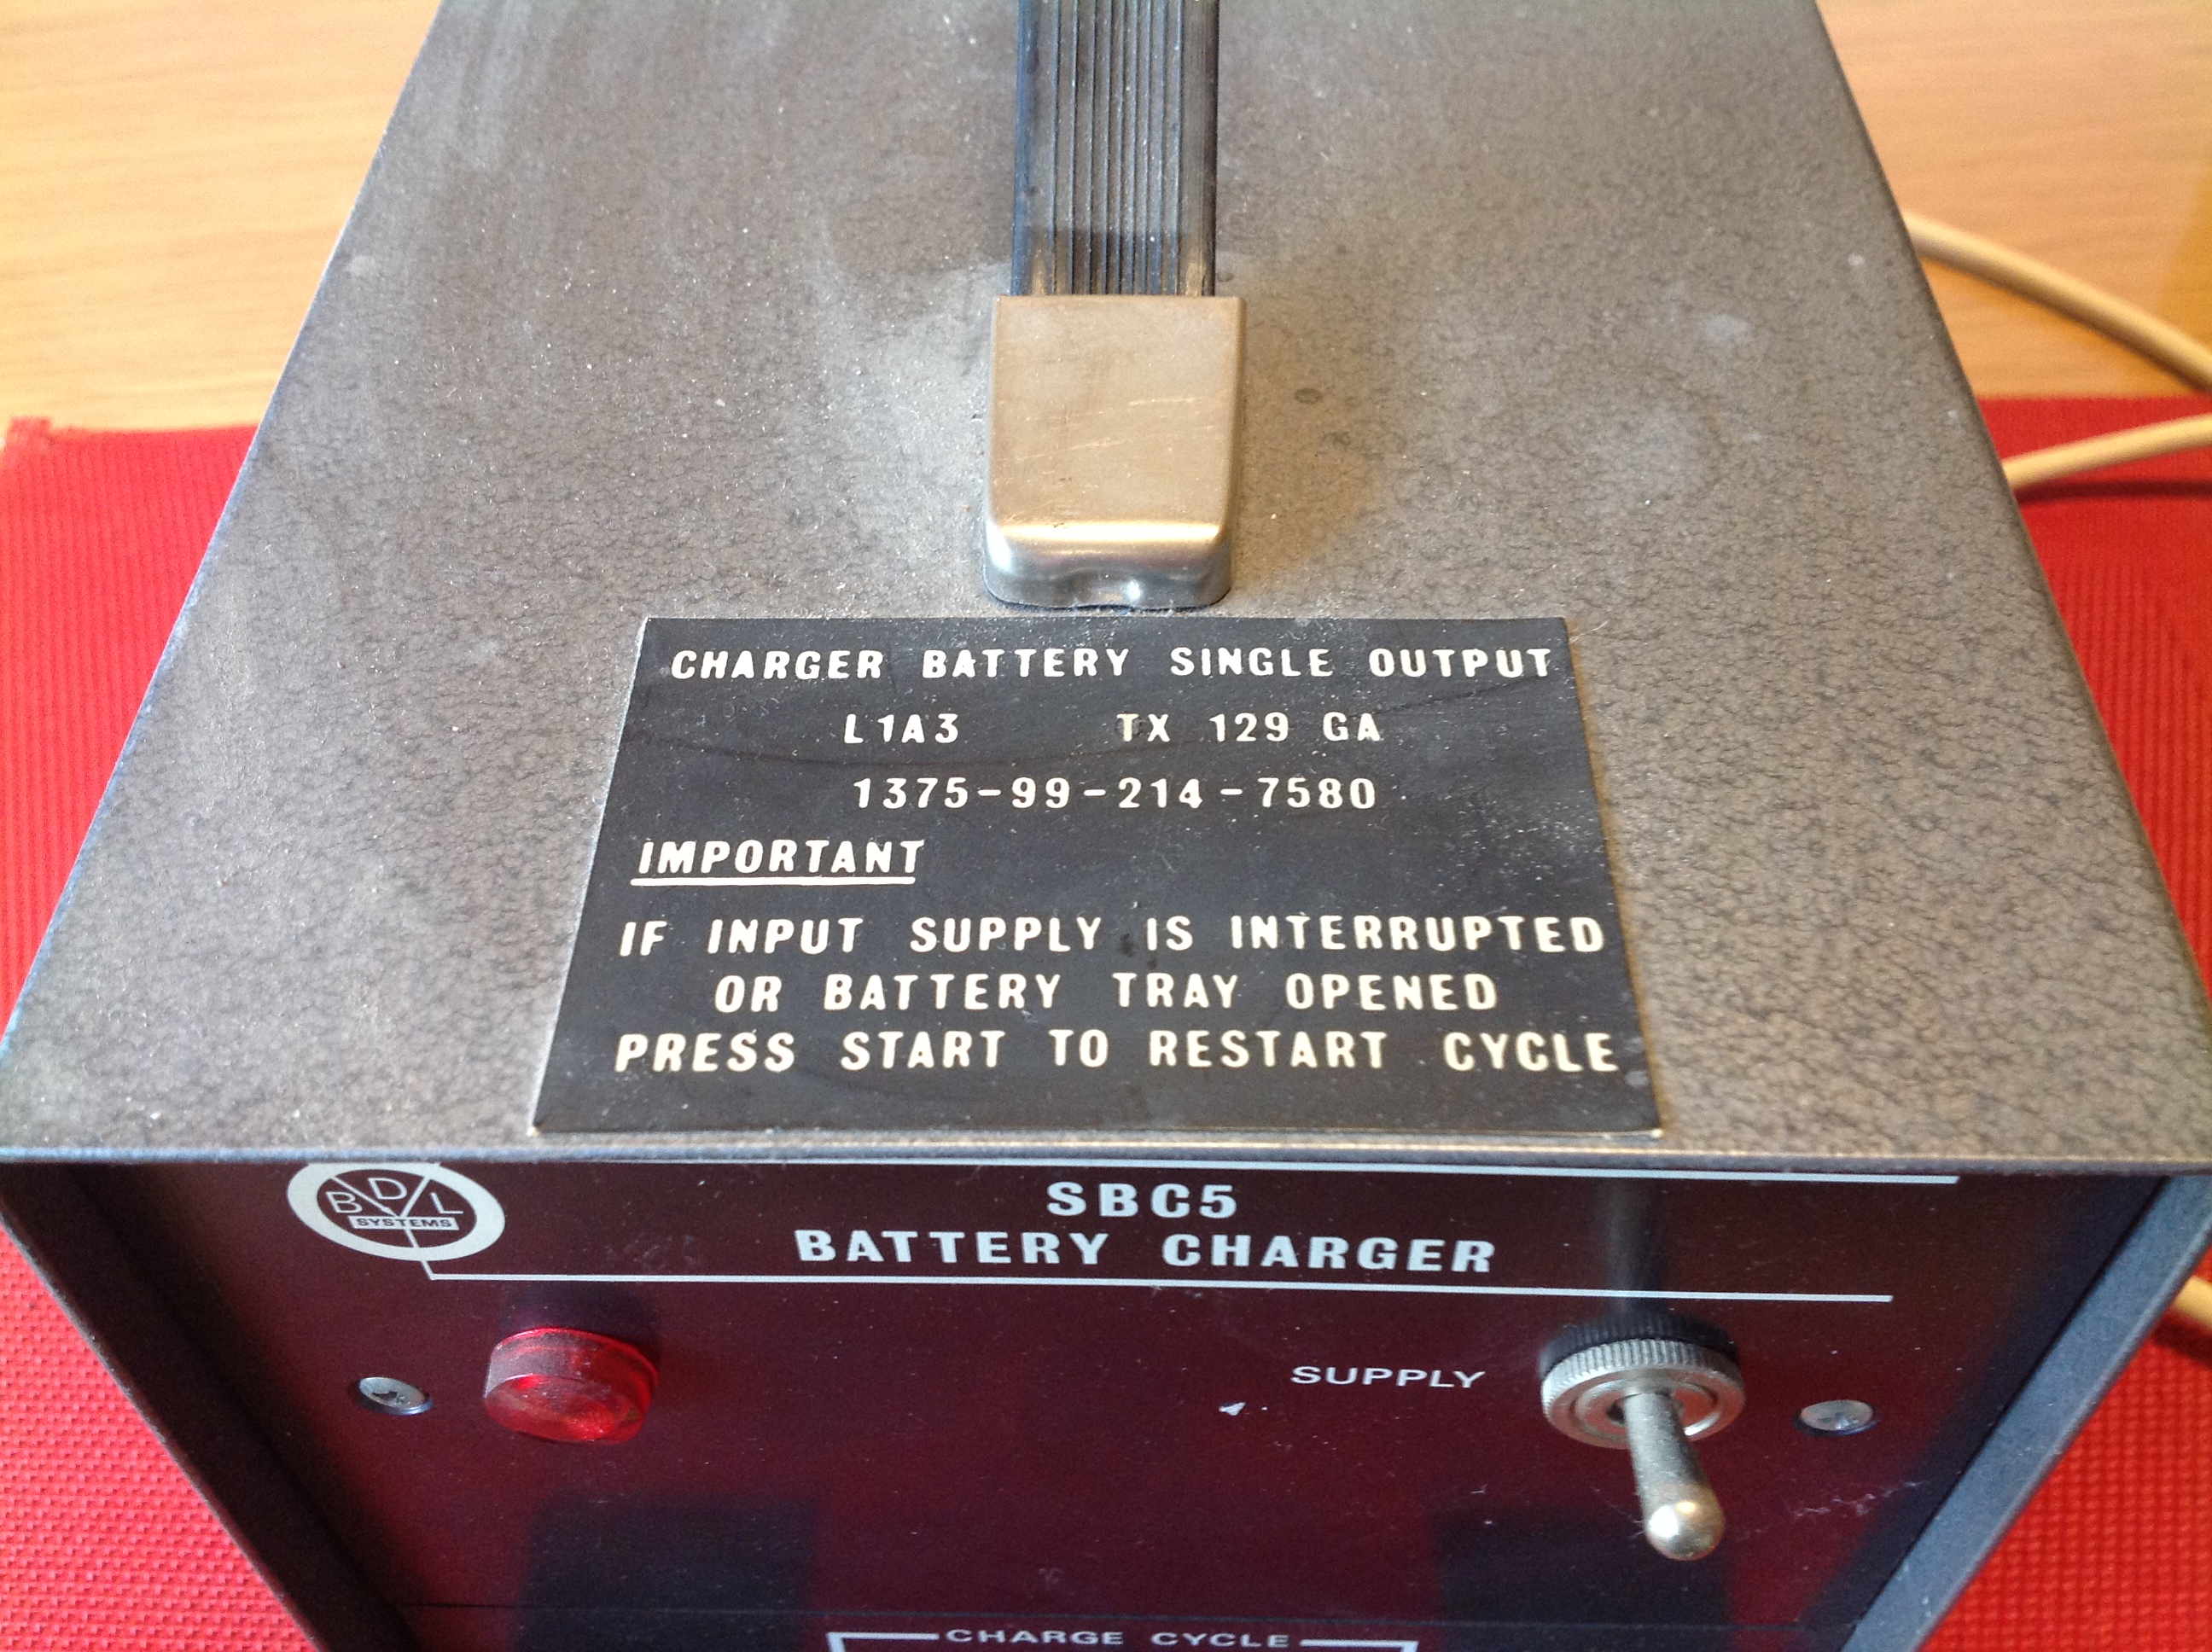 SBC 5, Battery Charger, Batterie-Ladegerät